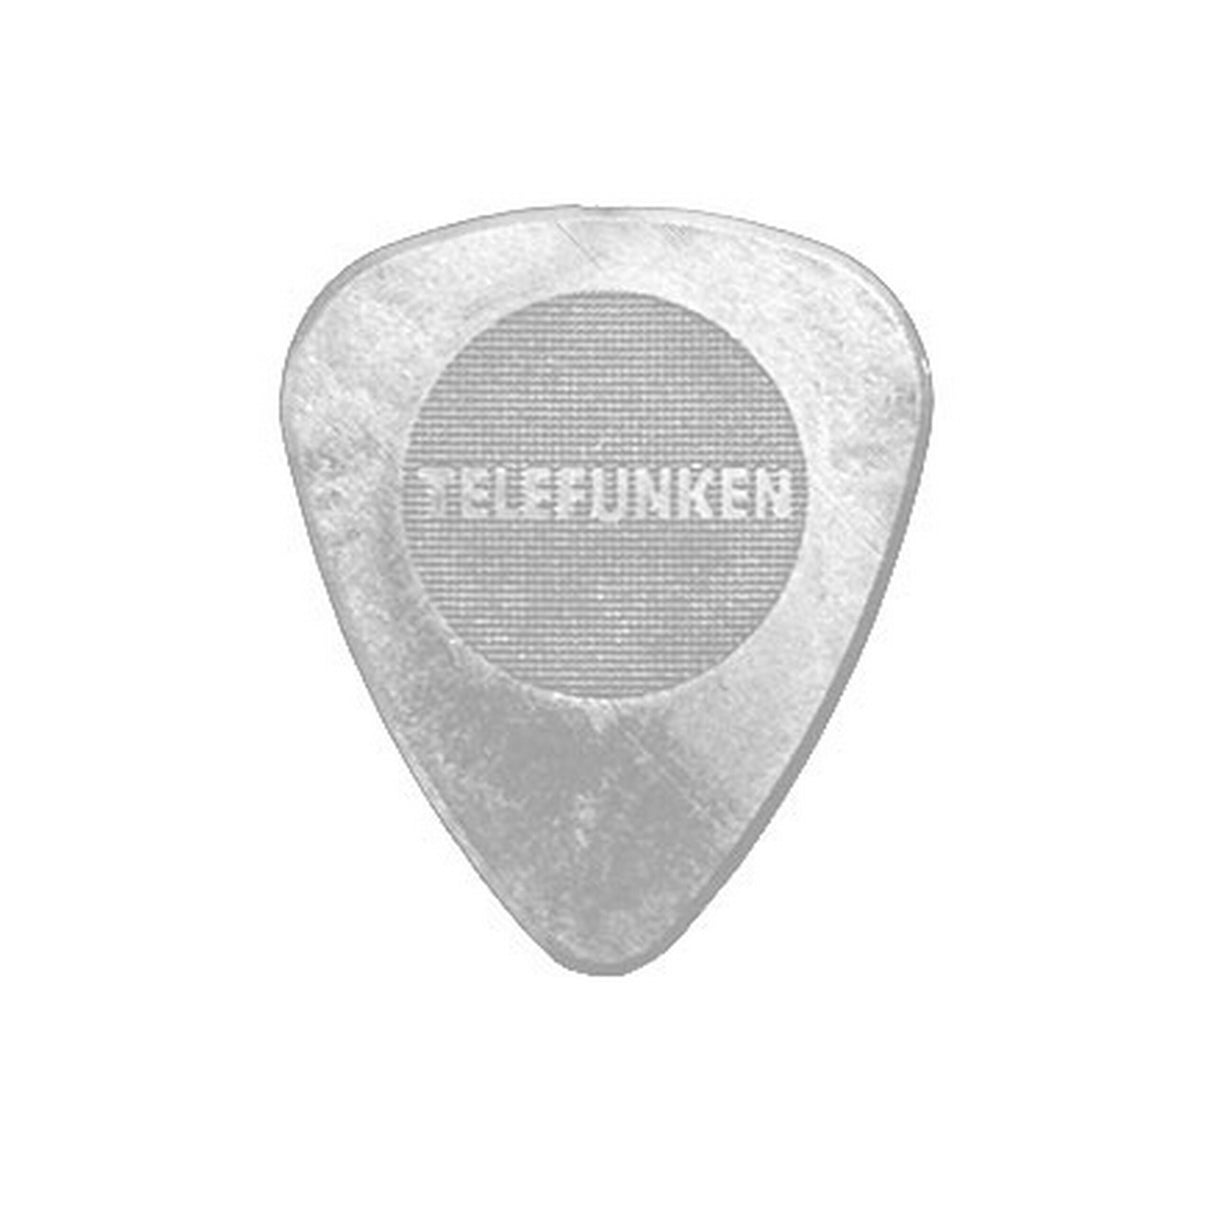 Telefunken.75mm Thin Circle Delrin Guitar Picks, White, 6-Pack